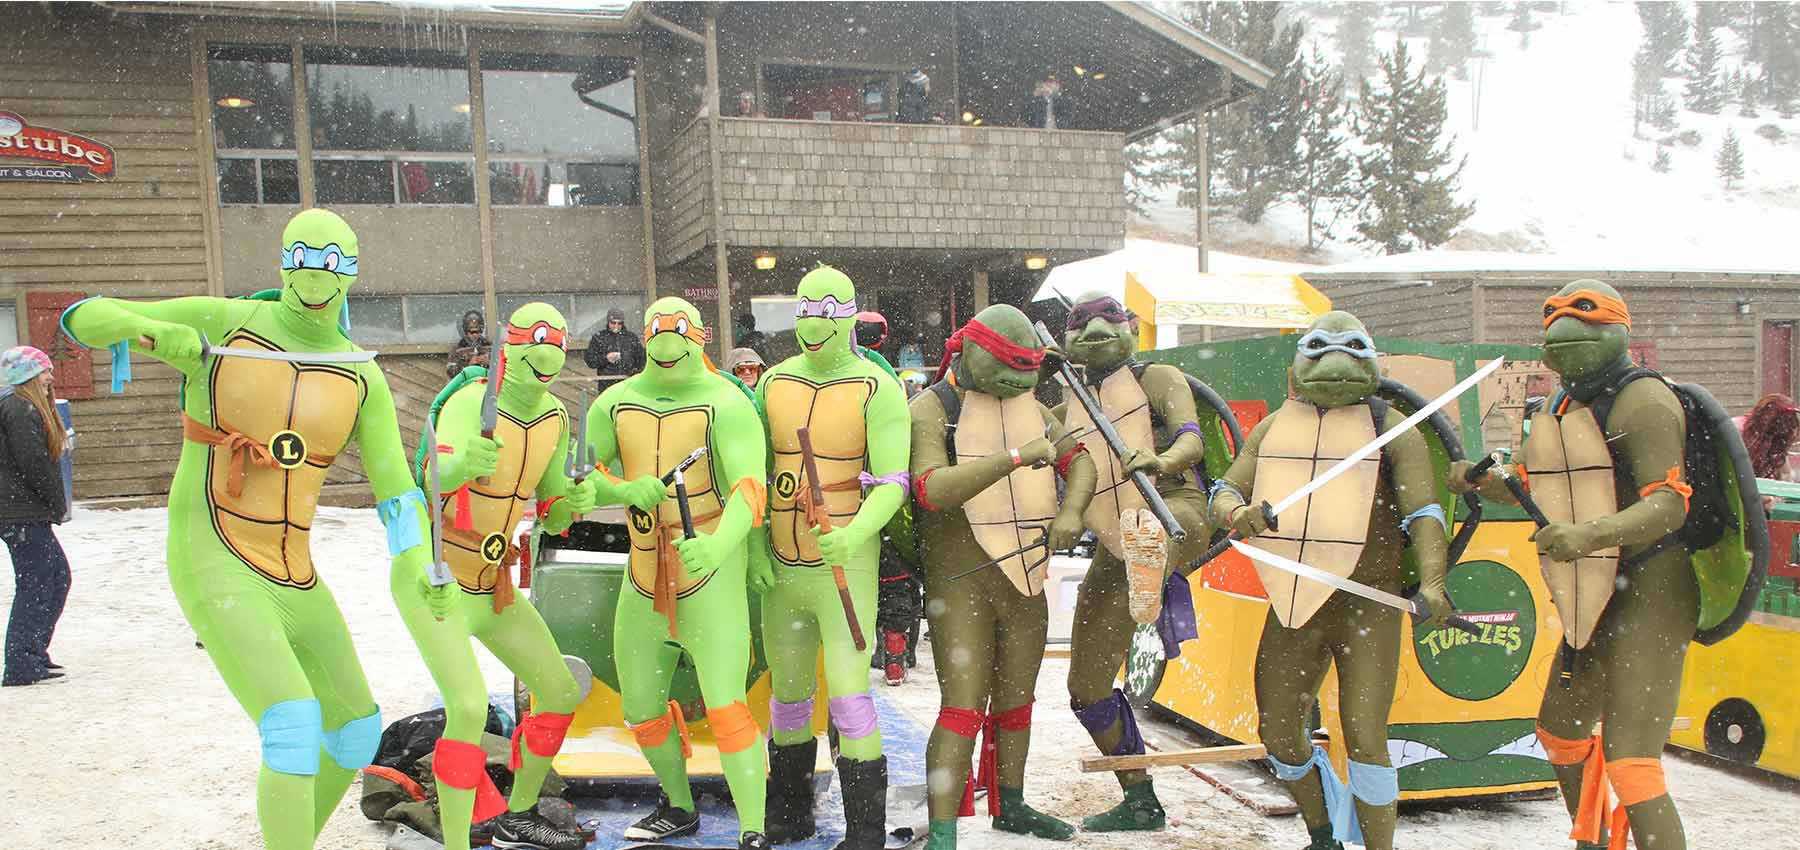 ninja turtle costumes at winter carnival